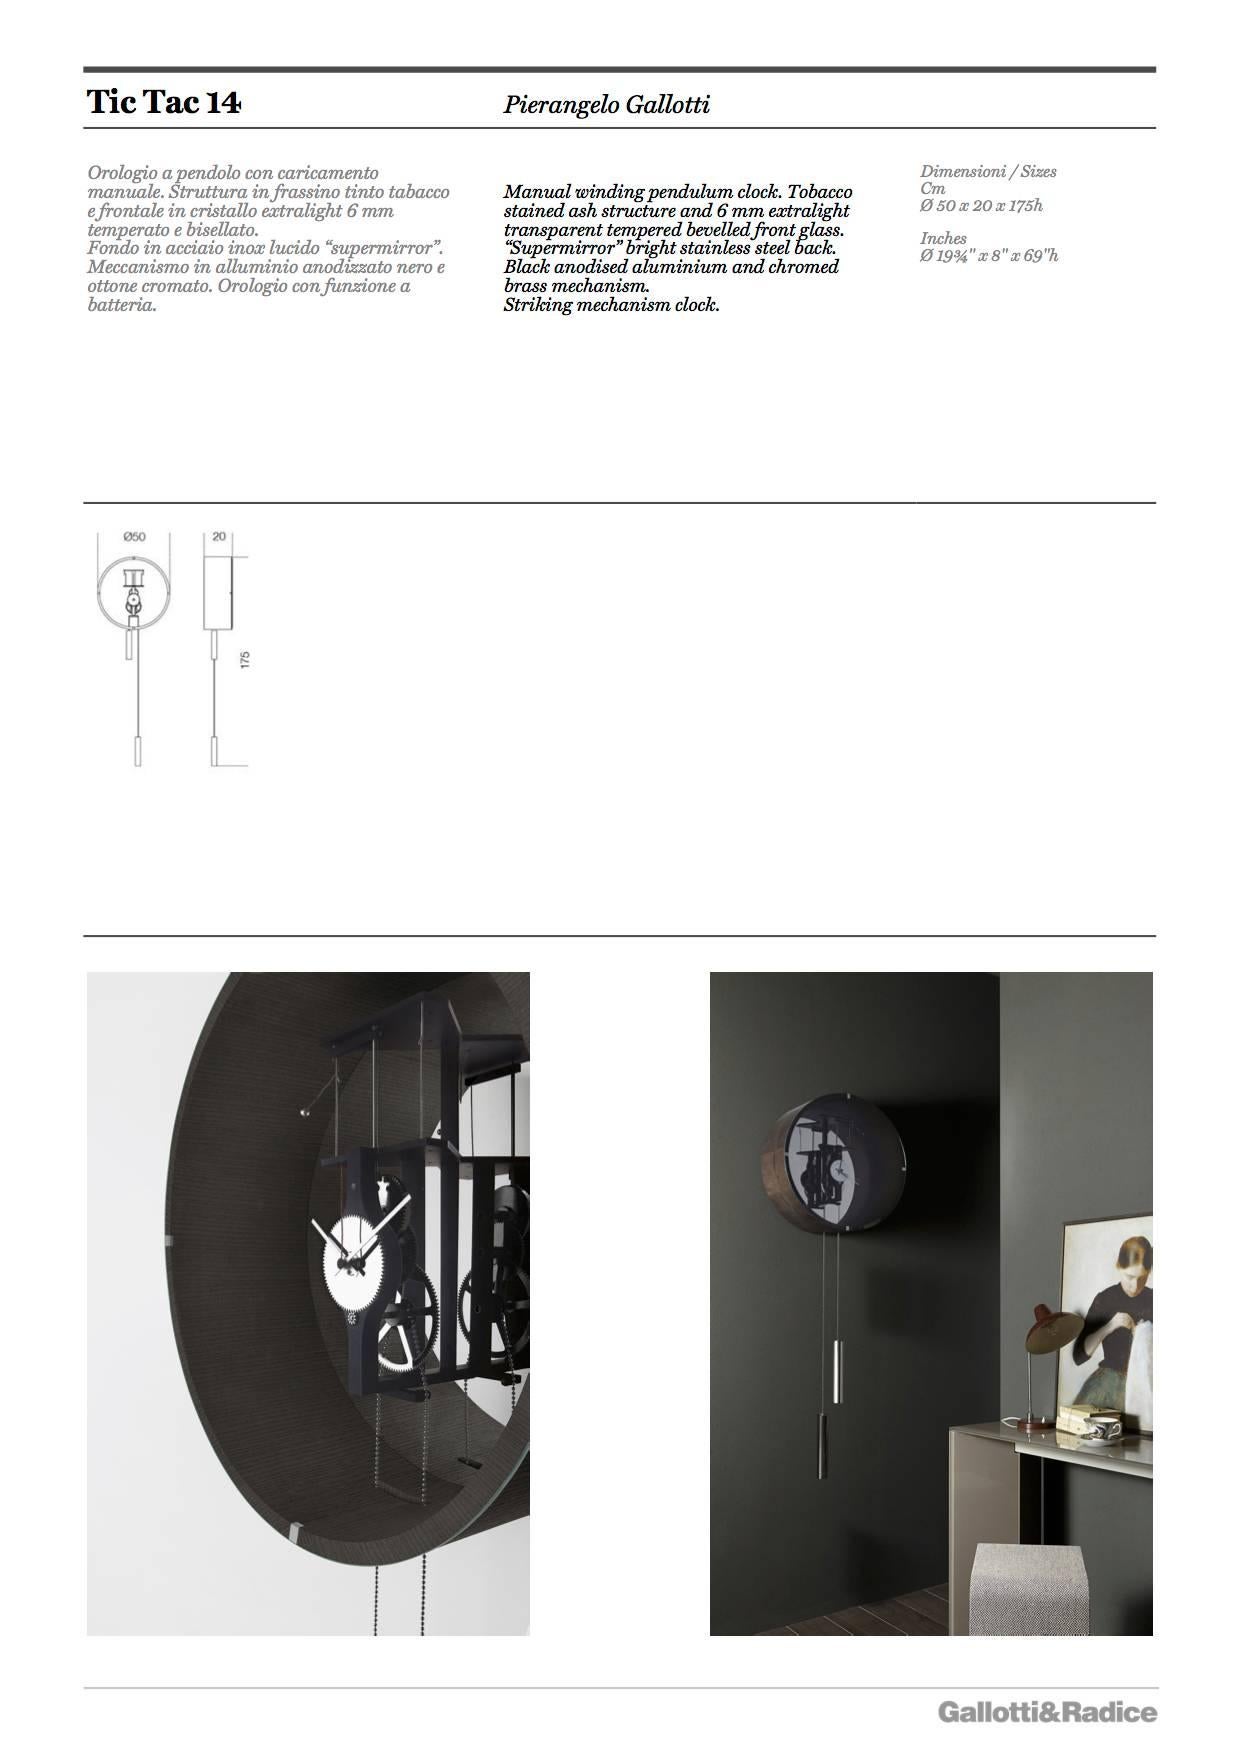 Modern Gallotti & Radice Tic Tac 14 Self Winding Pendulum Clock in Tobacco Stained Ash For Sale